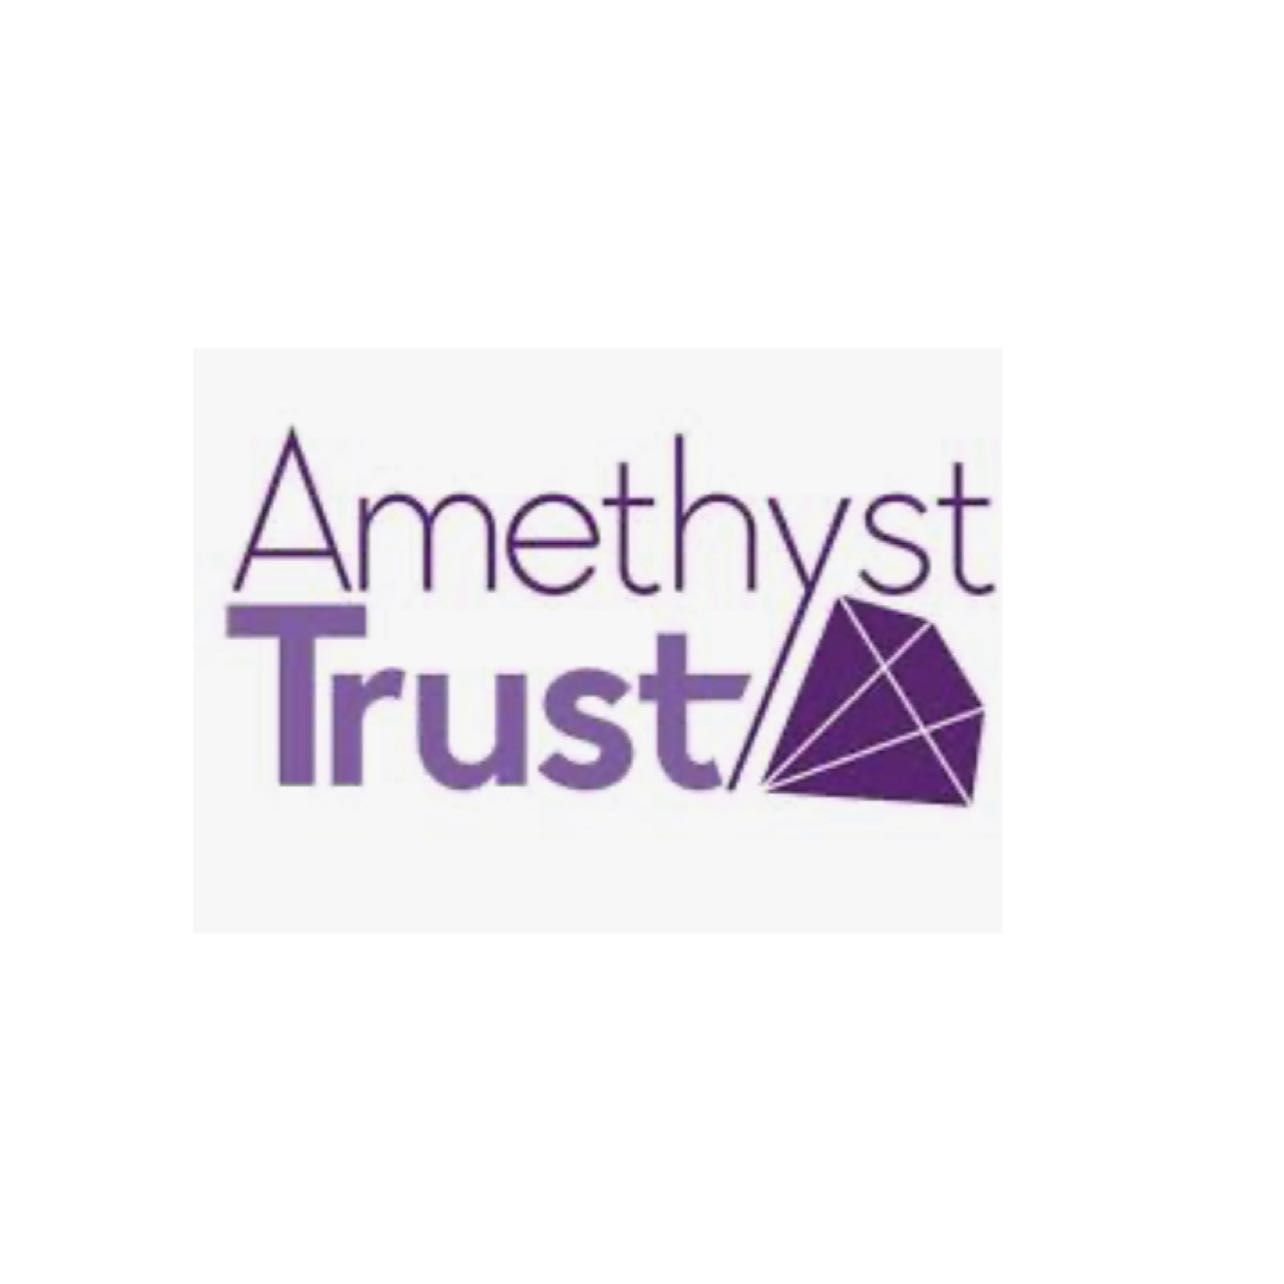 Amethyst trust therapy portfolio